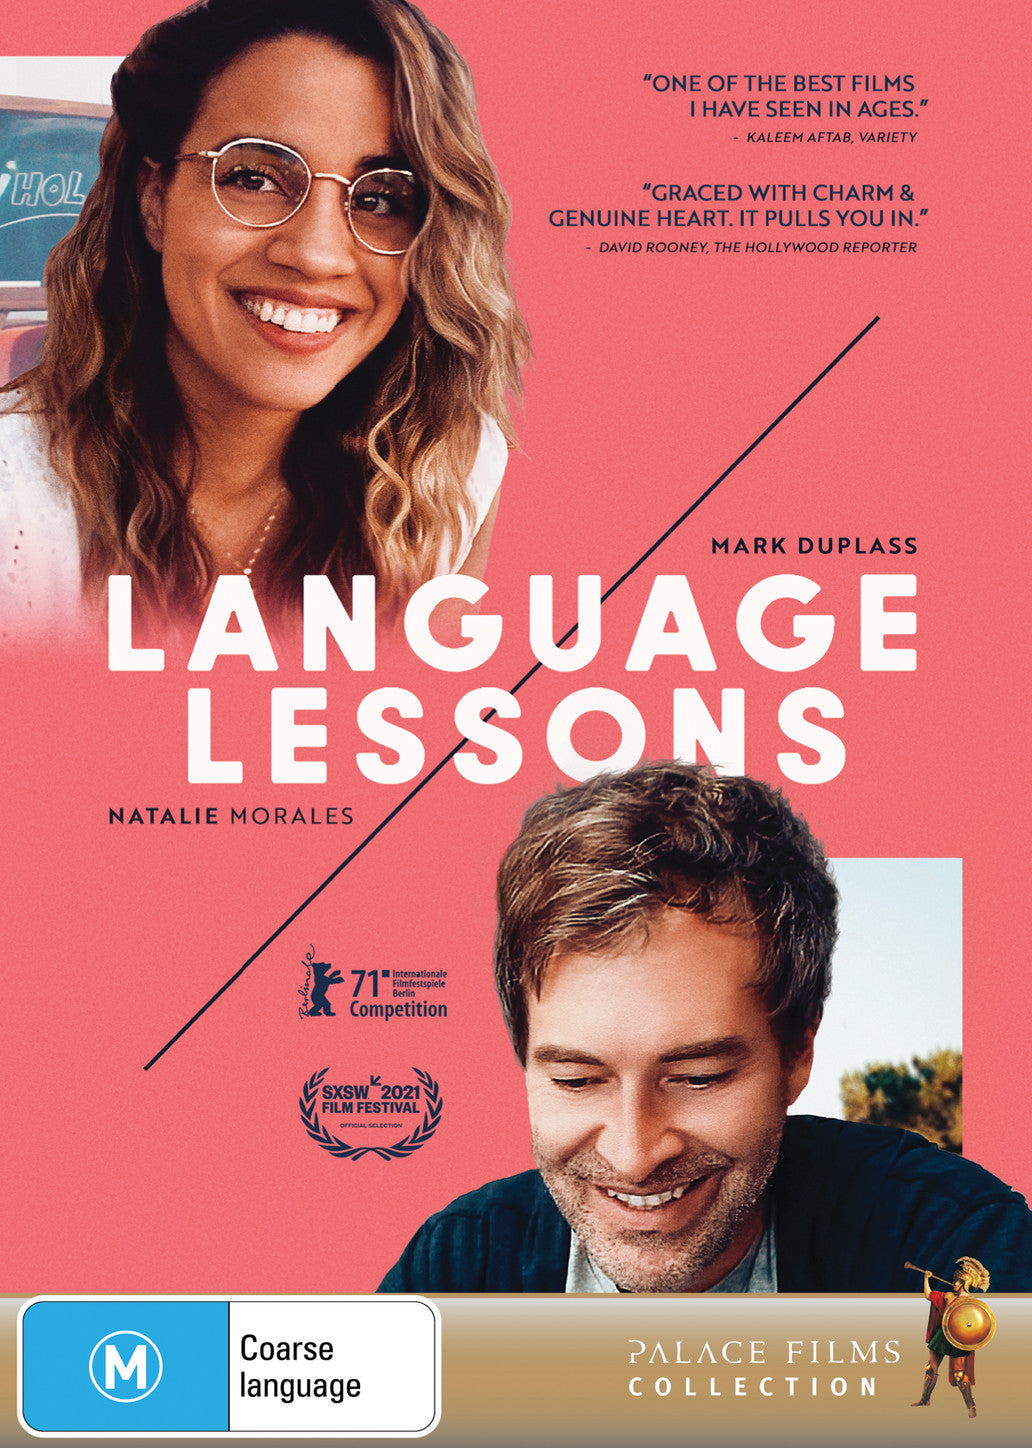 LANGUAGE LESSONS